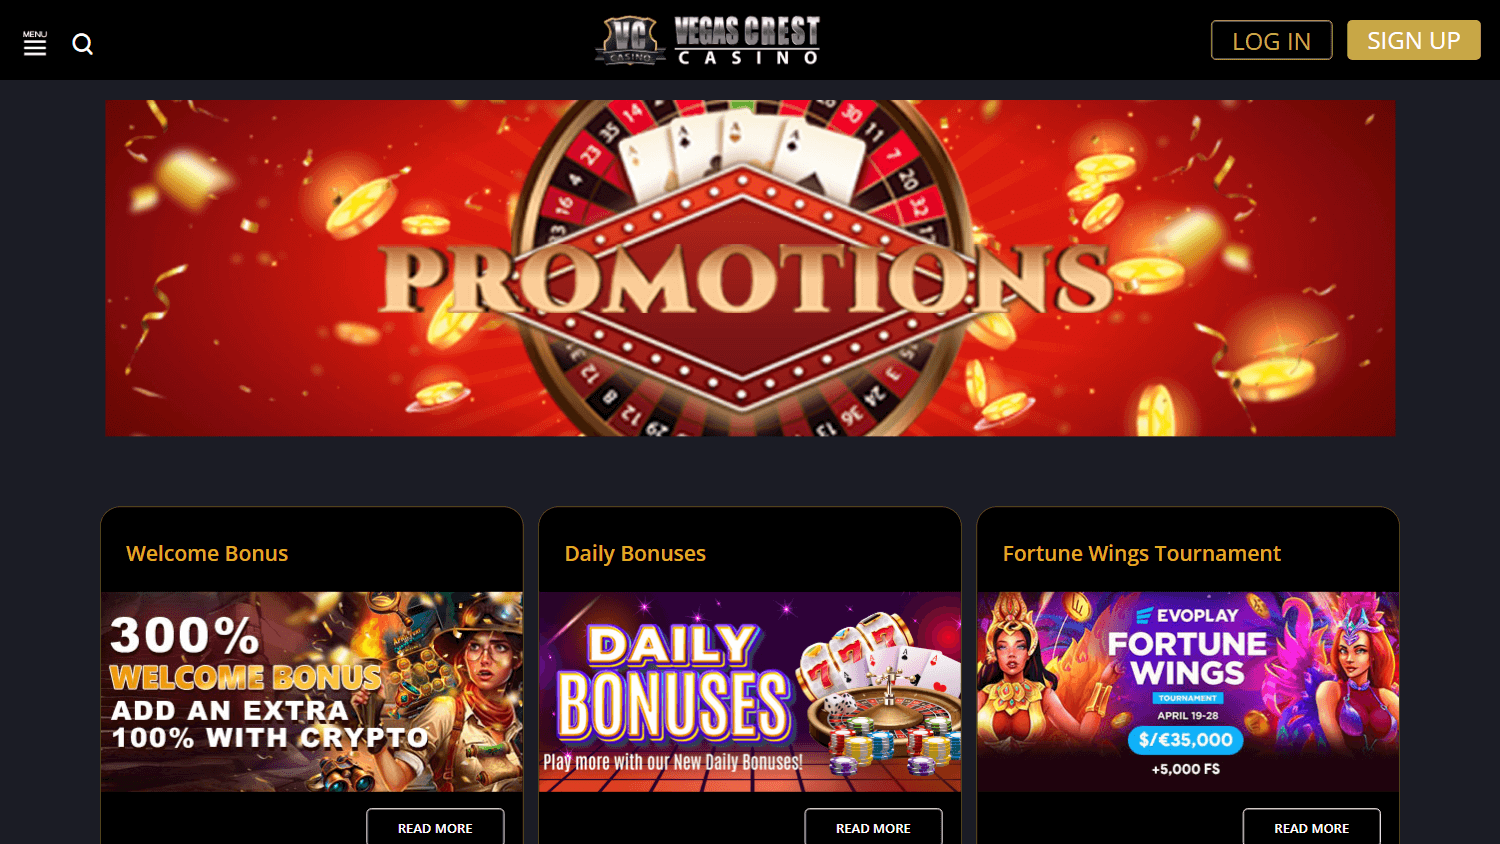 vegas_crest_casino_promotions_desktop